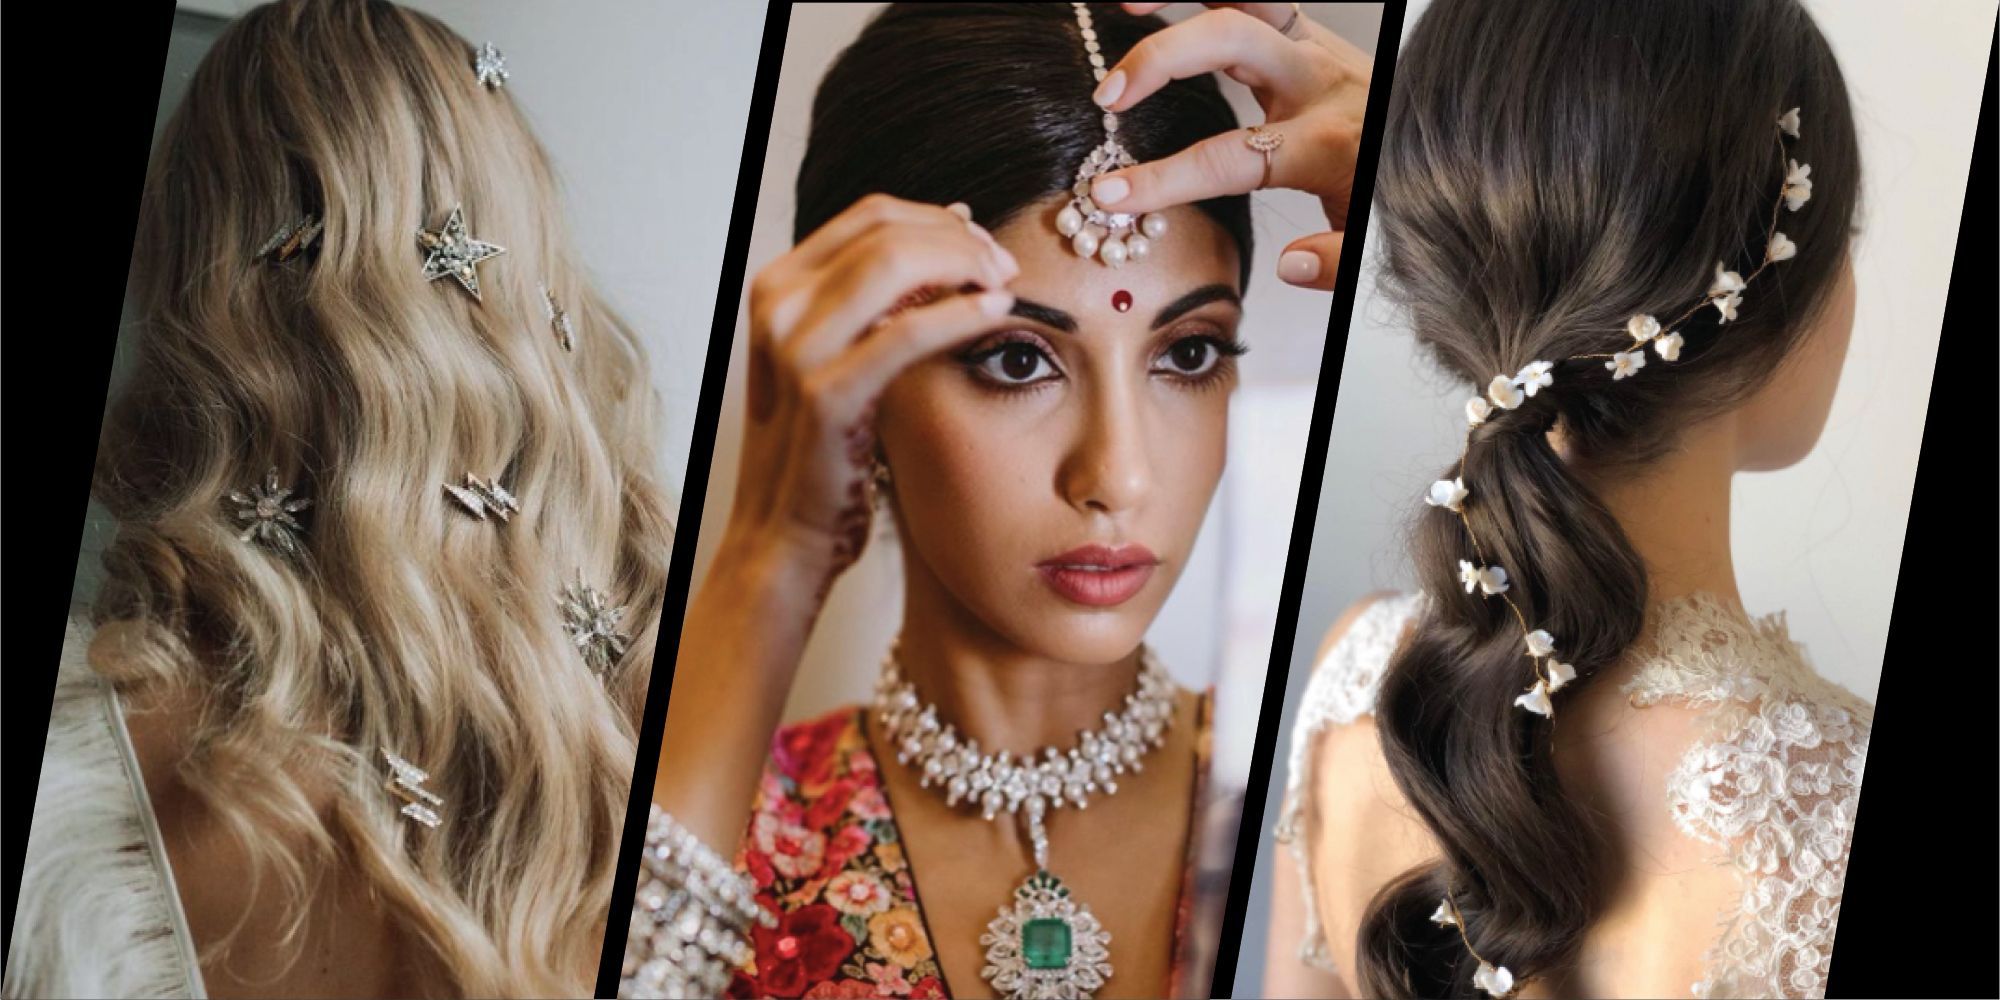 Best UK wedding hair, make-up artists | Bridal hair, make-up artists